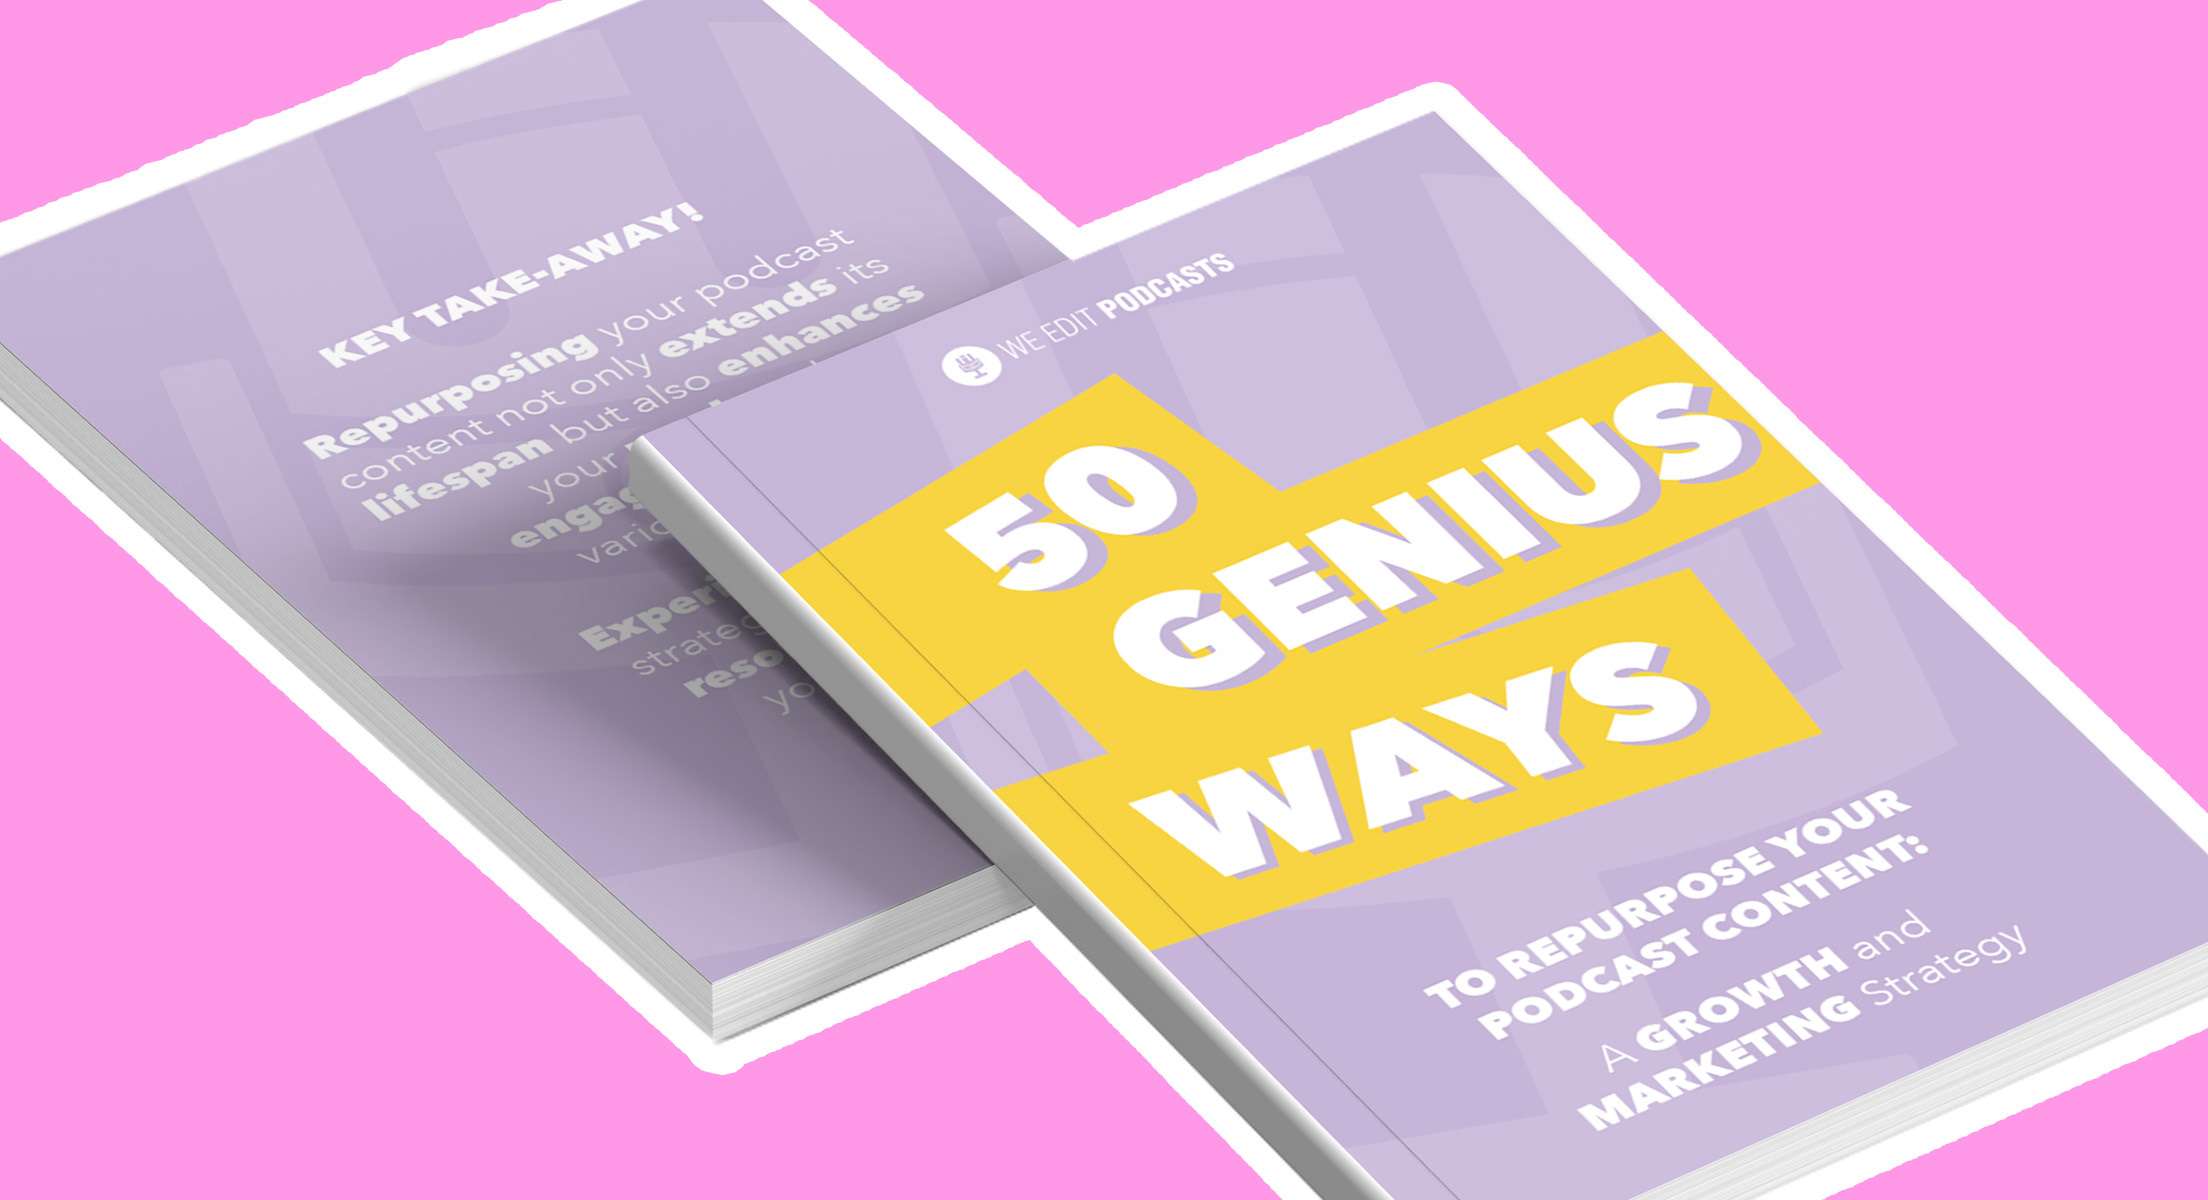 We Edit Podcast Resource 50 Genius Ways to Repurpose Podcast Content